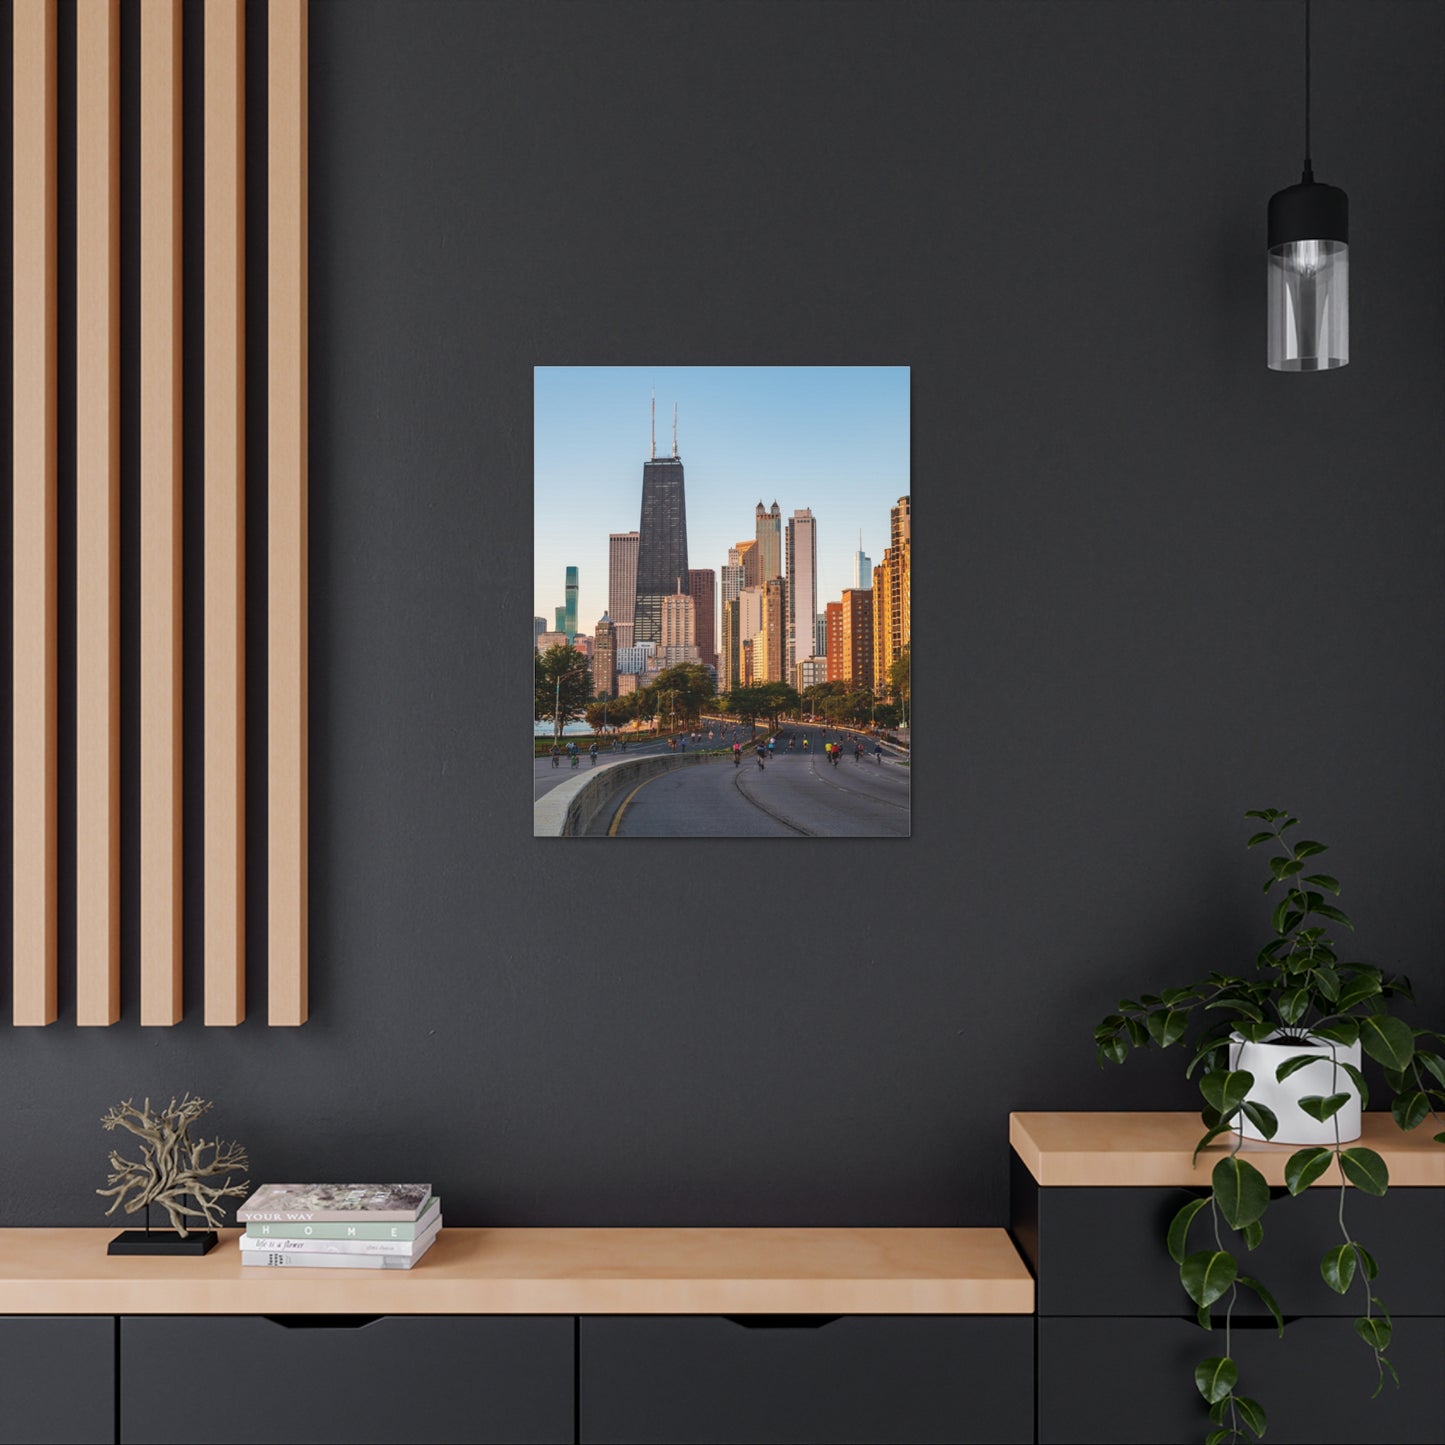 Chicago Skyline, Bike Race, Lakeshore Drive - Canvas Wall Print (Free Shipping)